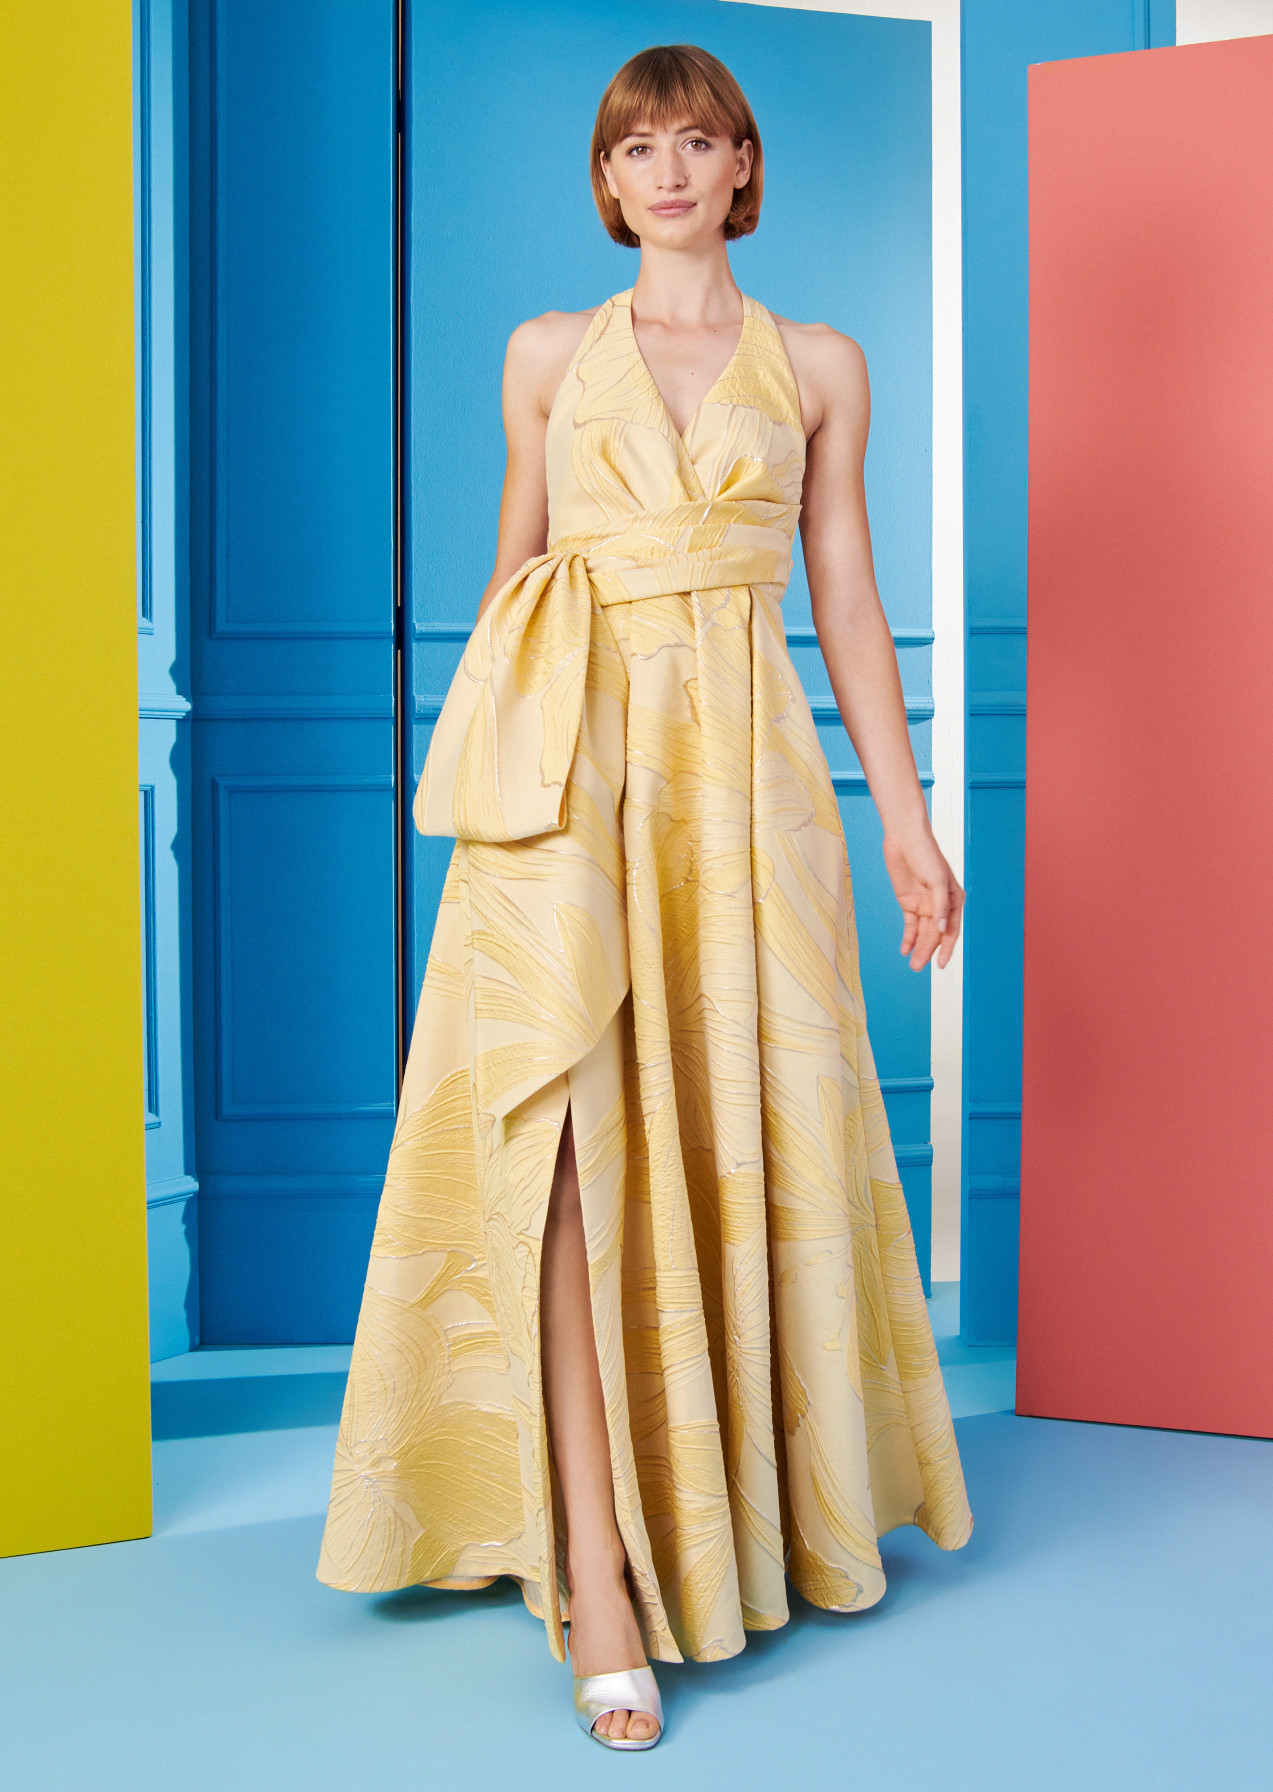 PHOTOS] Kate Spade's Best Fashion Designs on Celebs